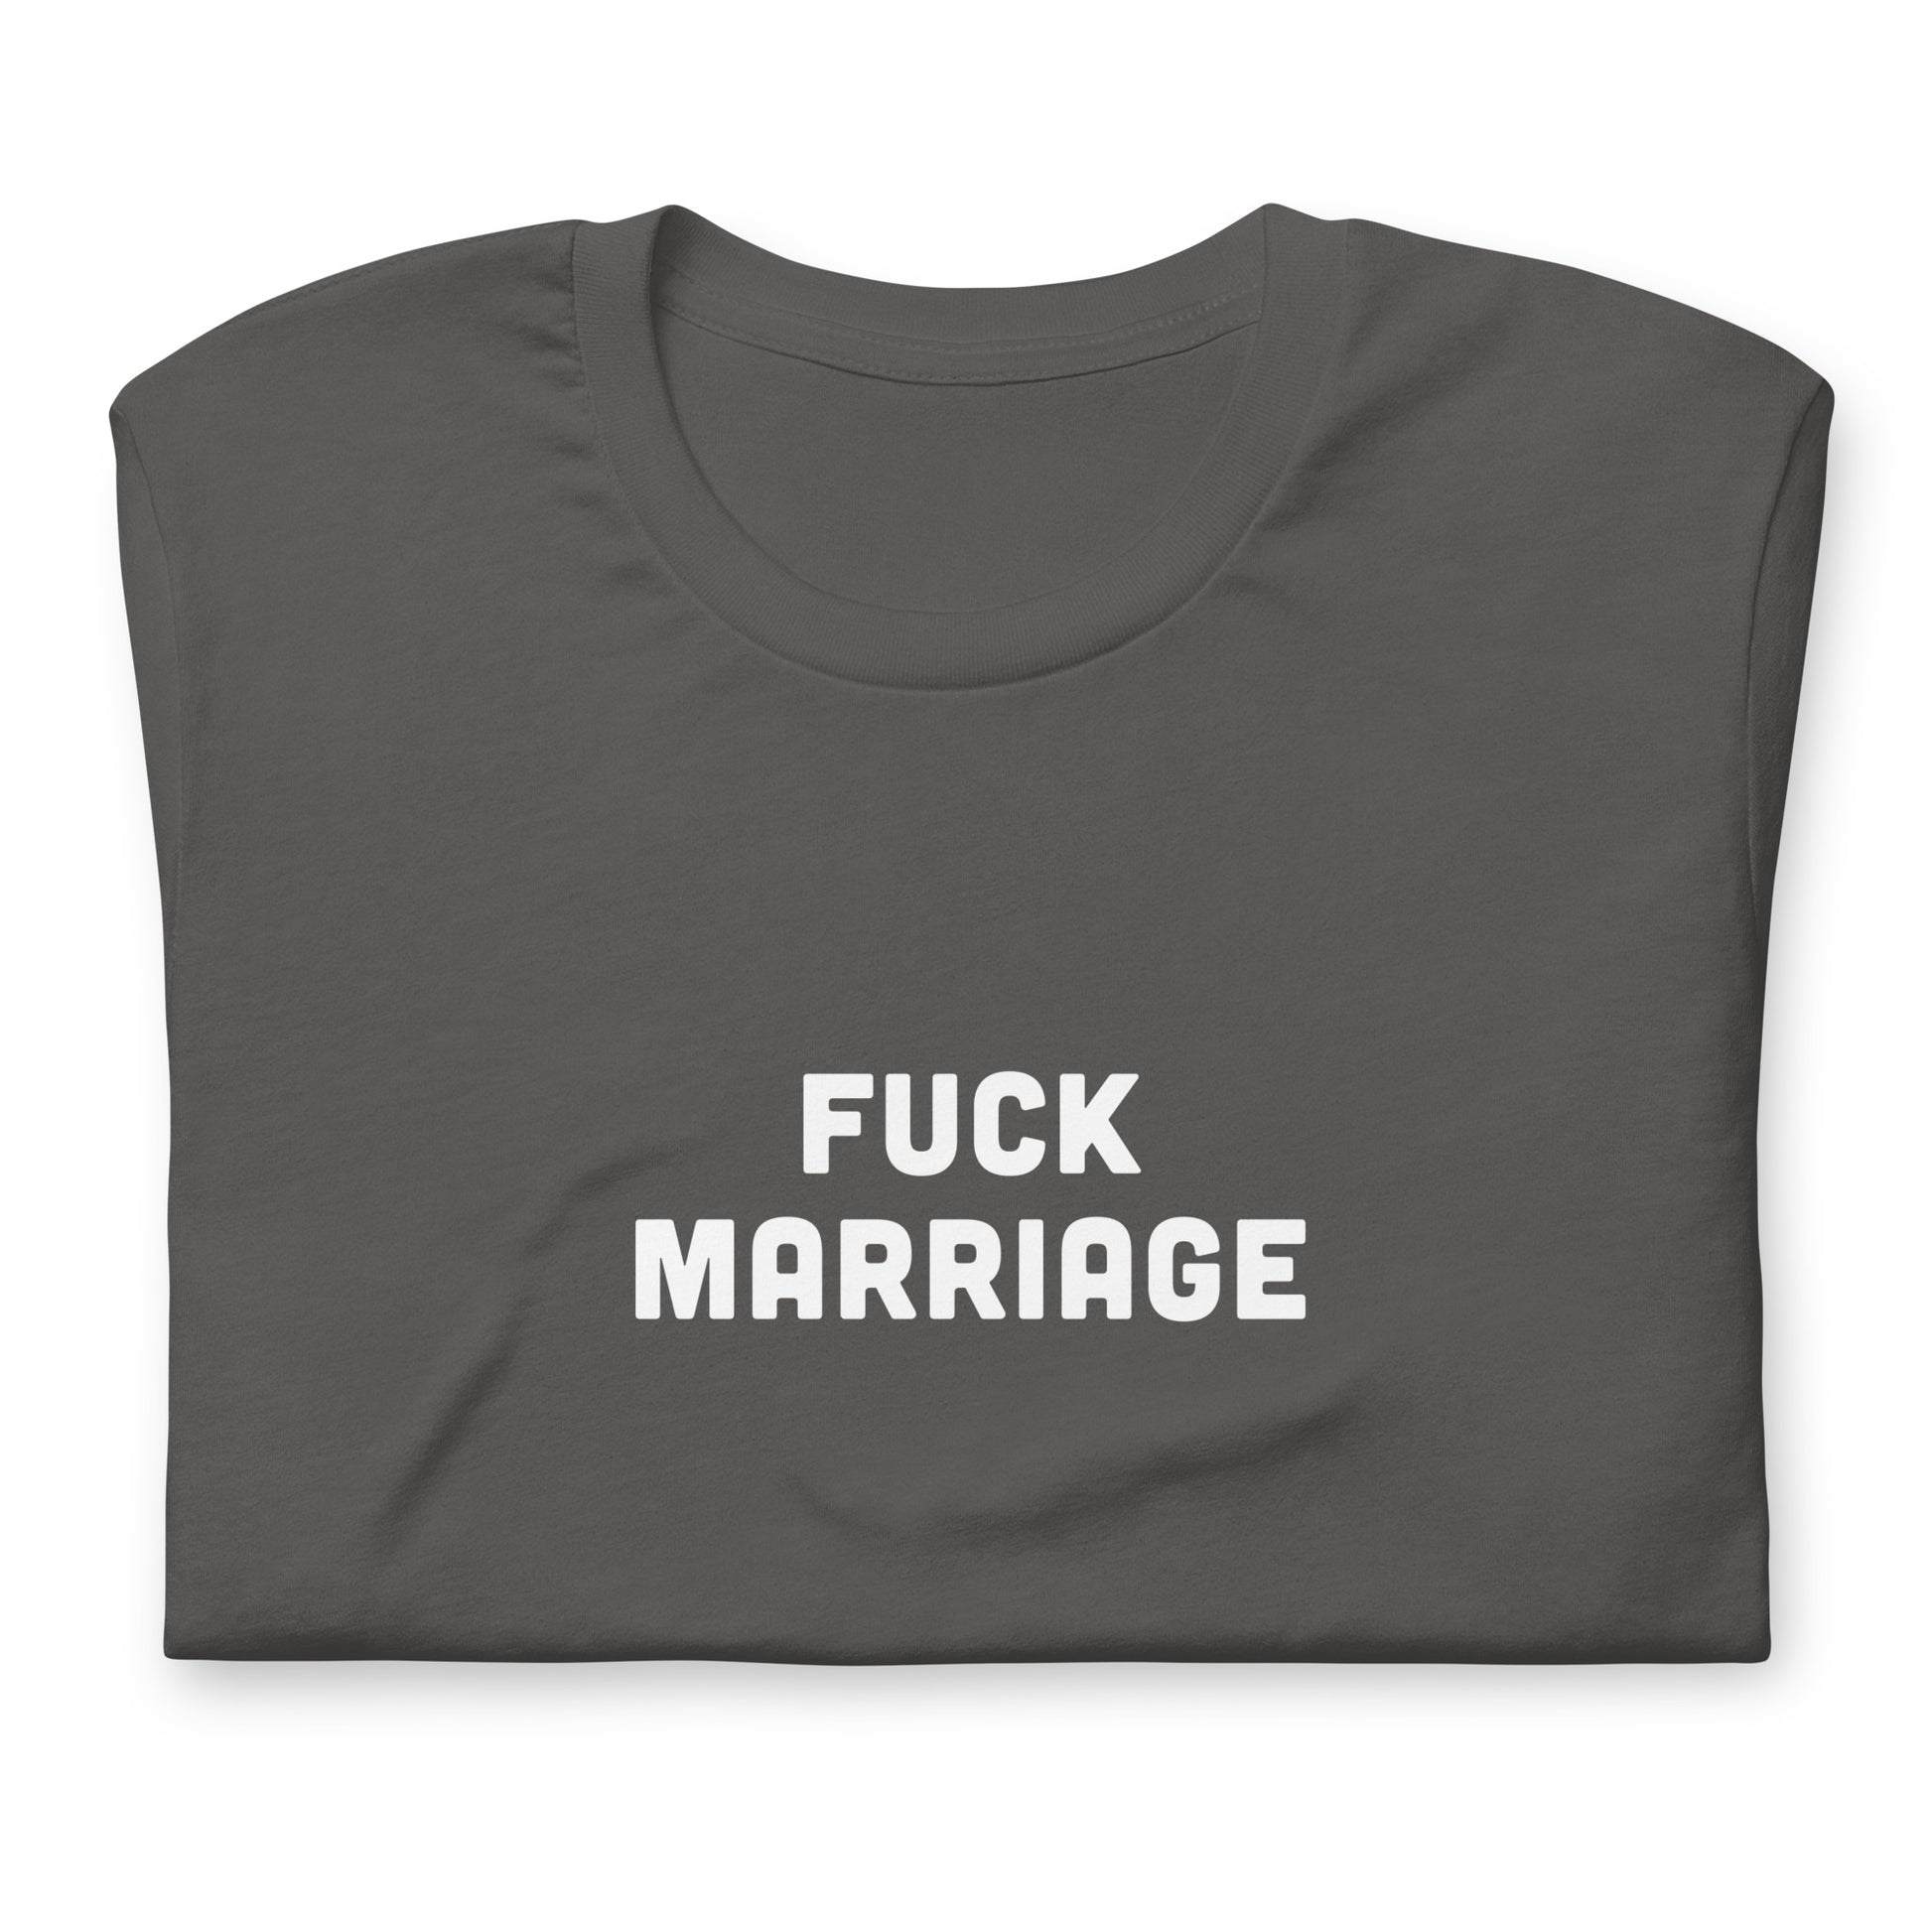 Fuck Marriage T-Shirt Size 2XL Color Black